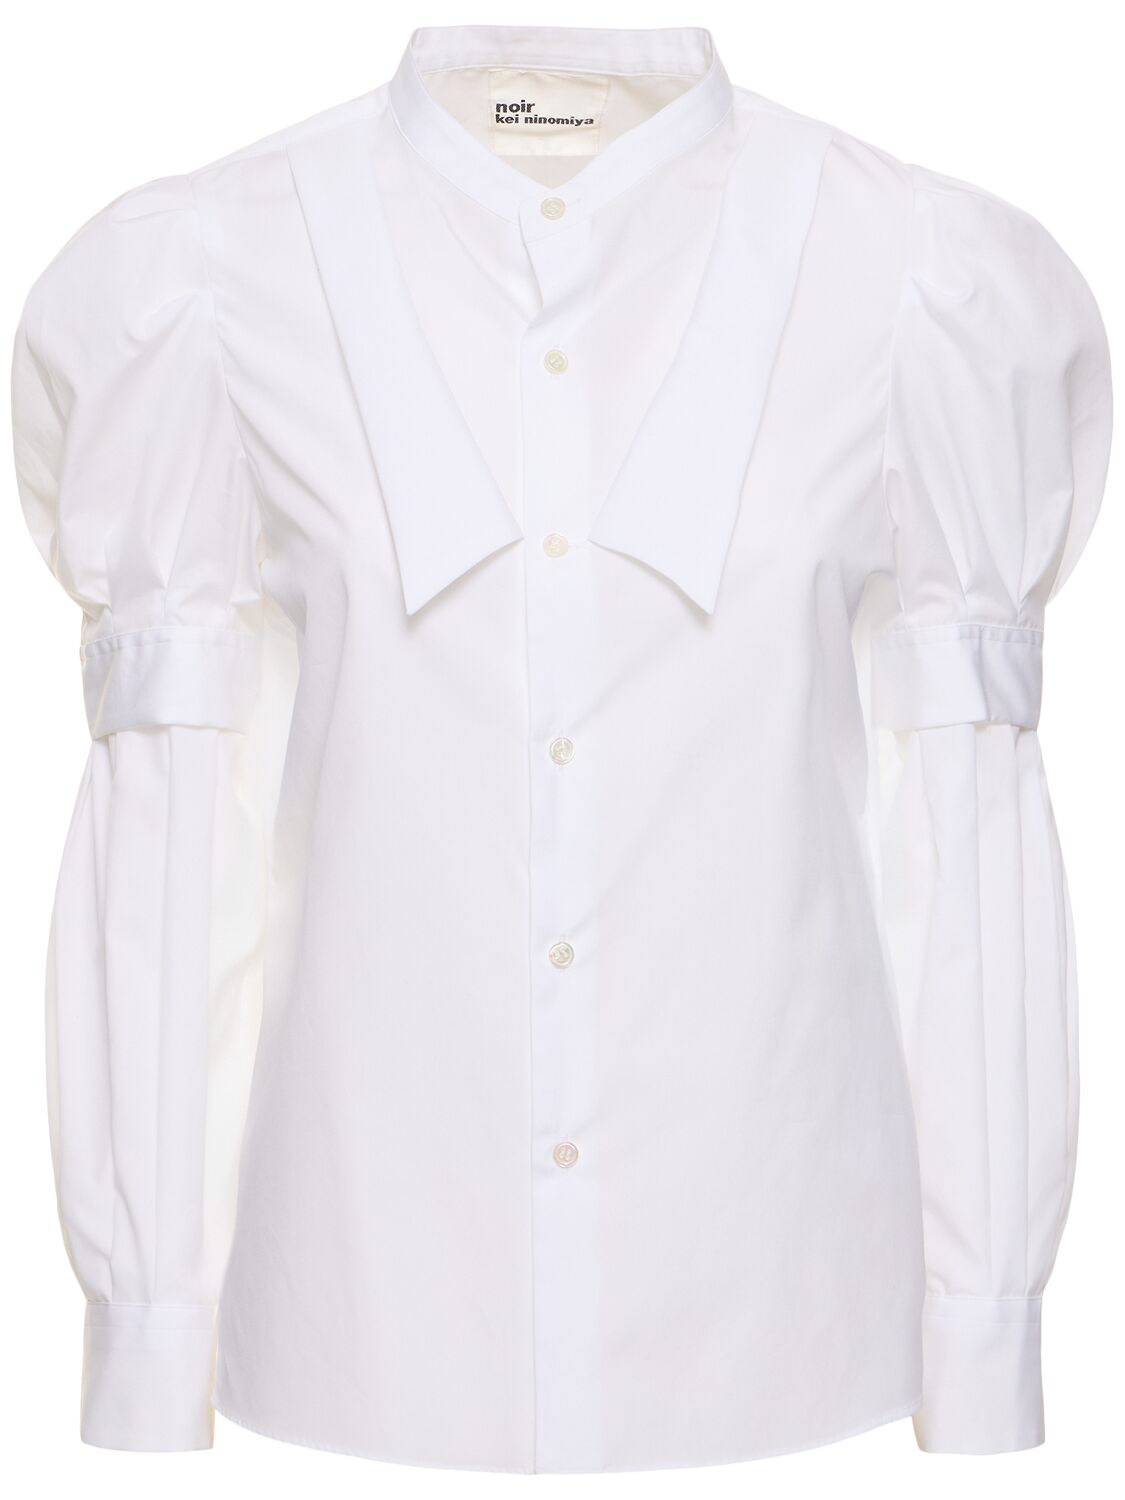 Broad Double Collar Cotton Shirt - NOIR KEI NINOMIYA - Modalova